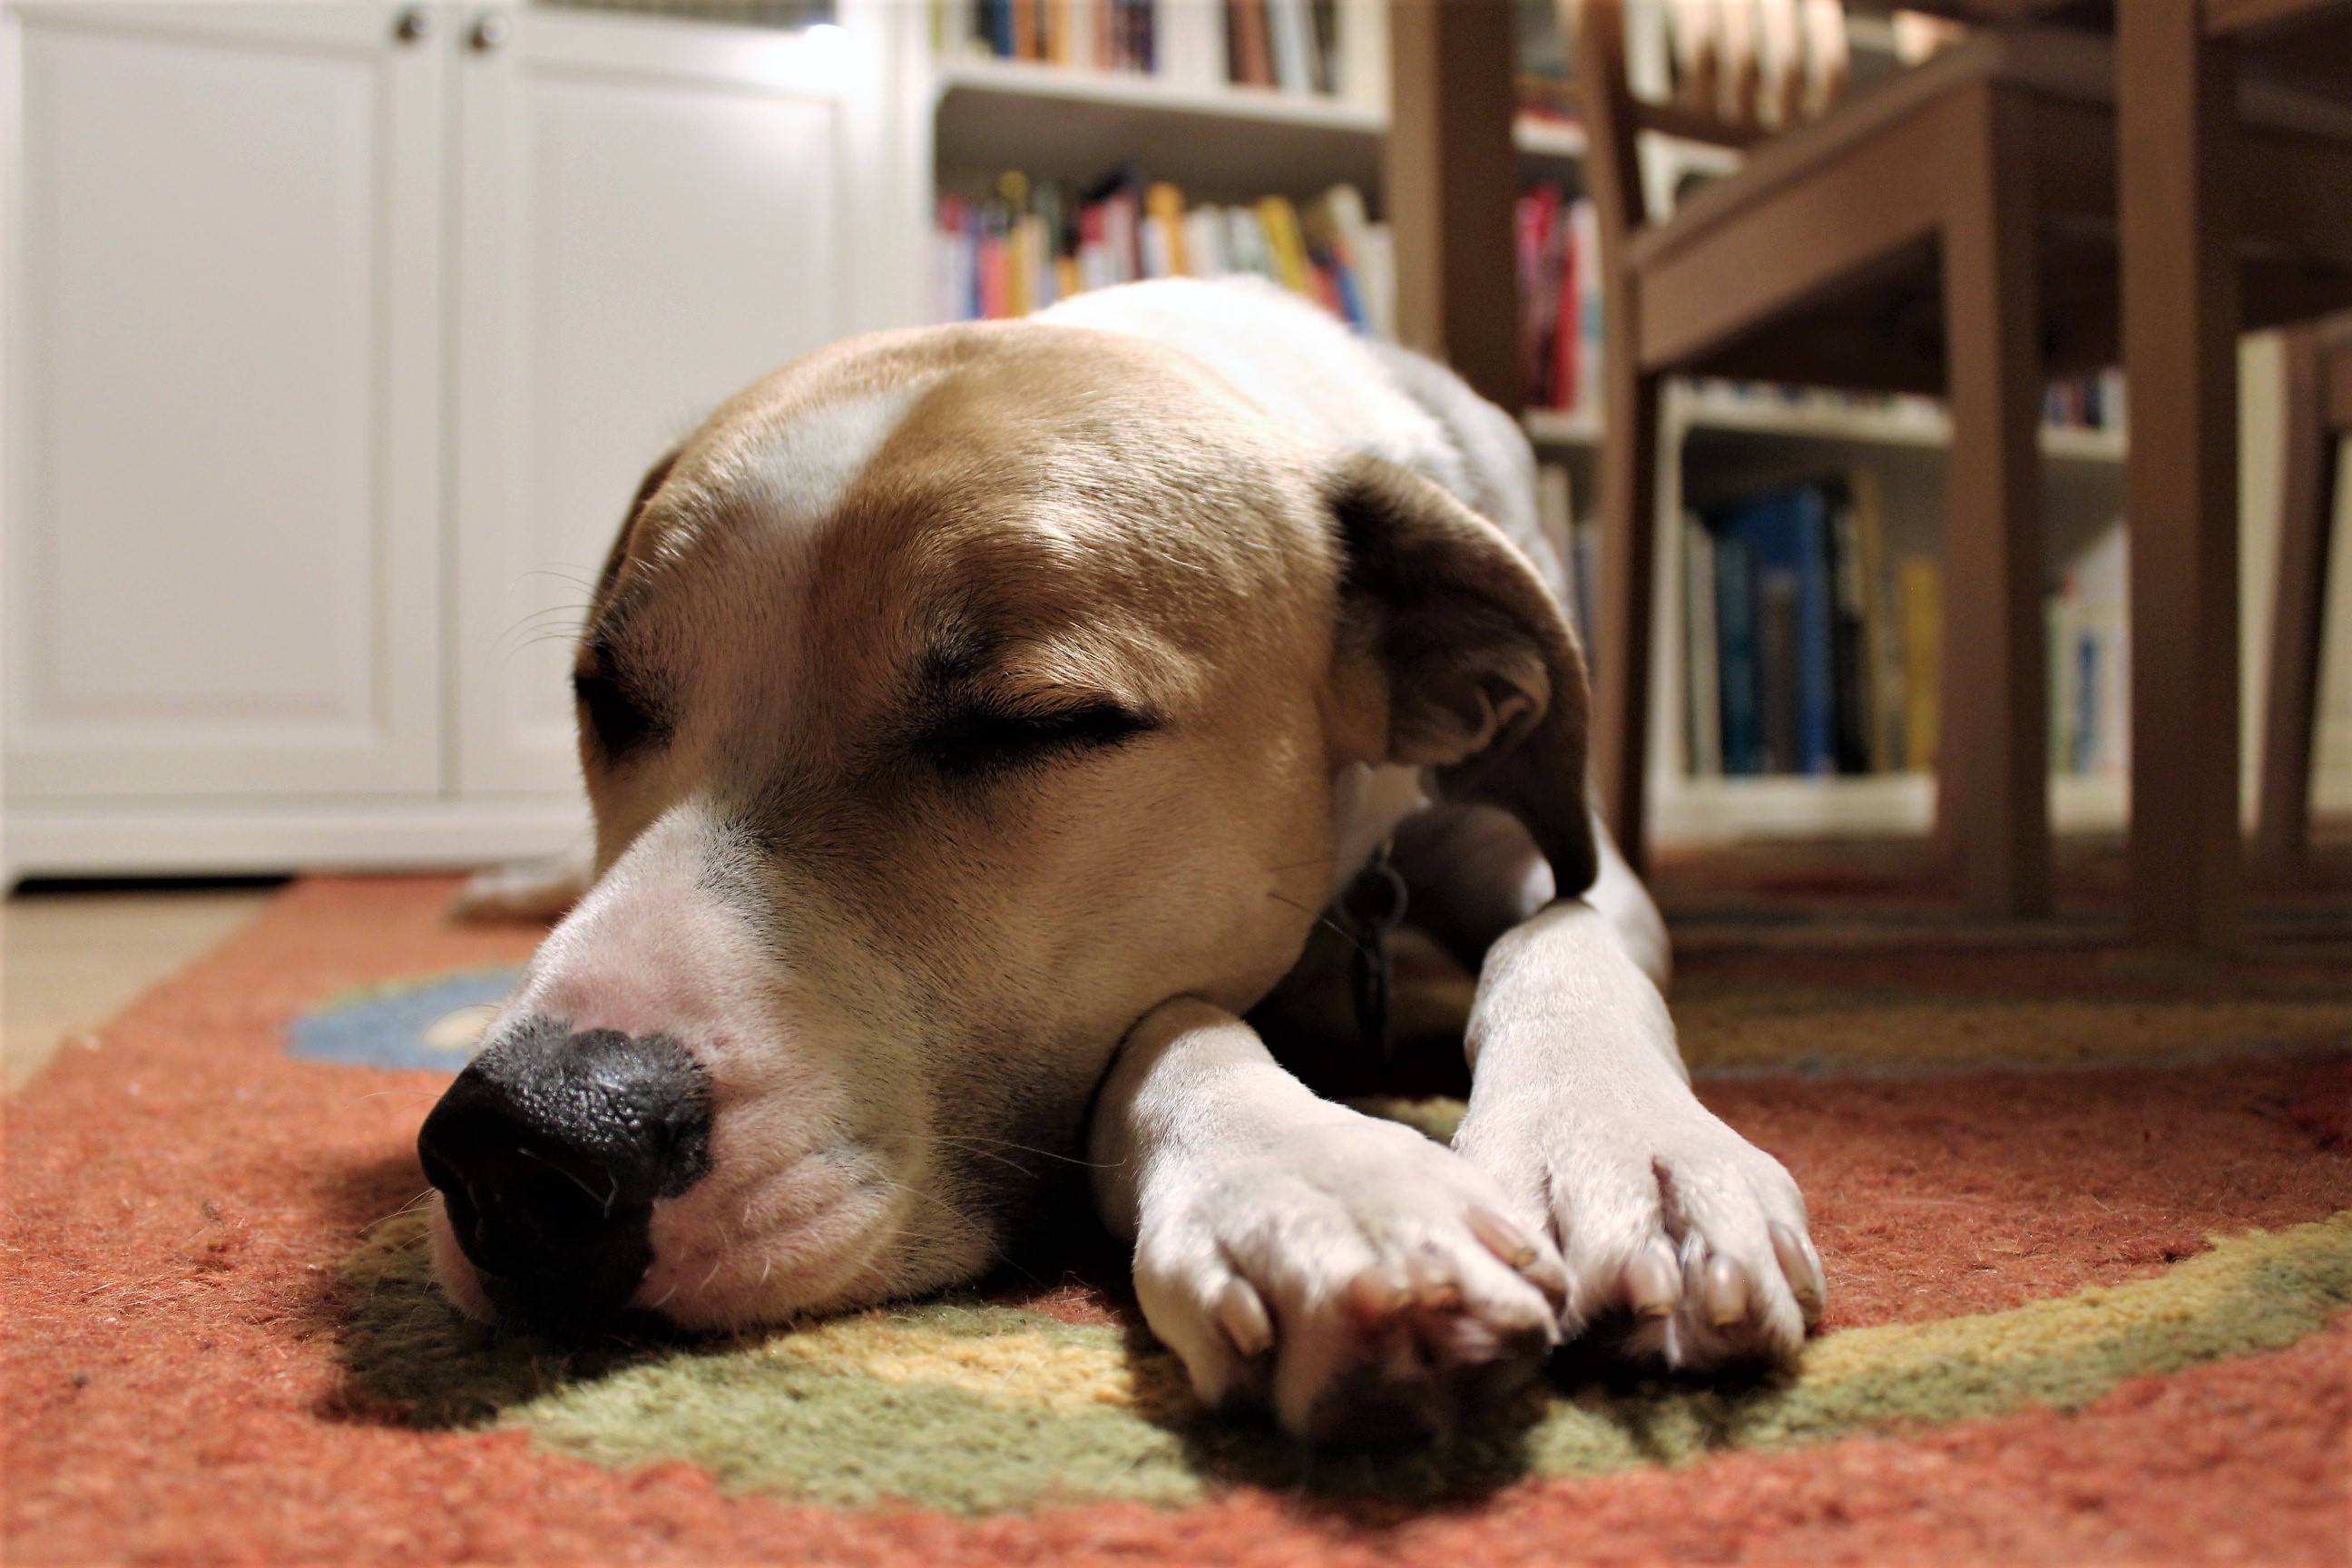 File:Sleeping dogs lie (31001440016).jpg - Wikimedia Commons